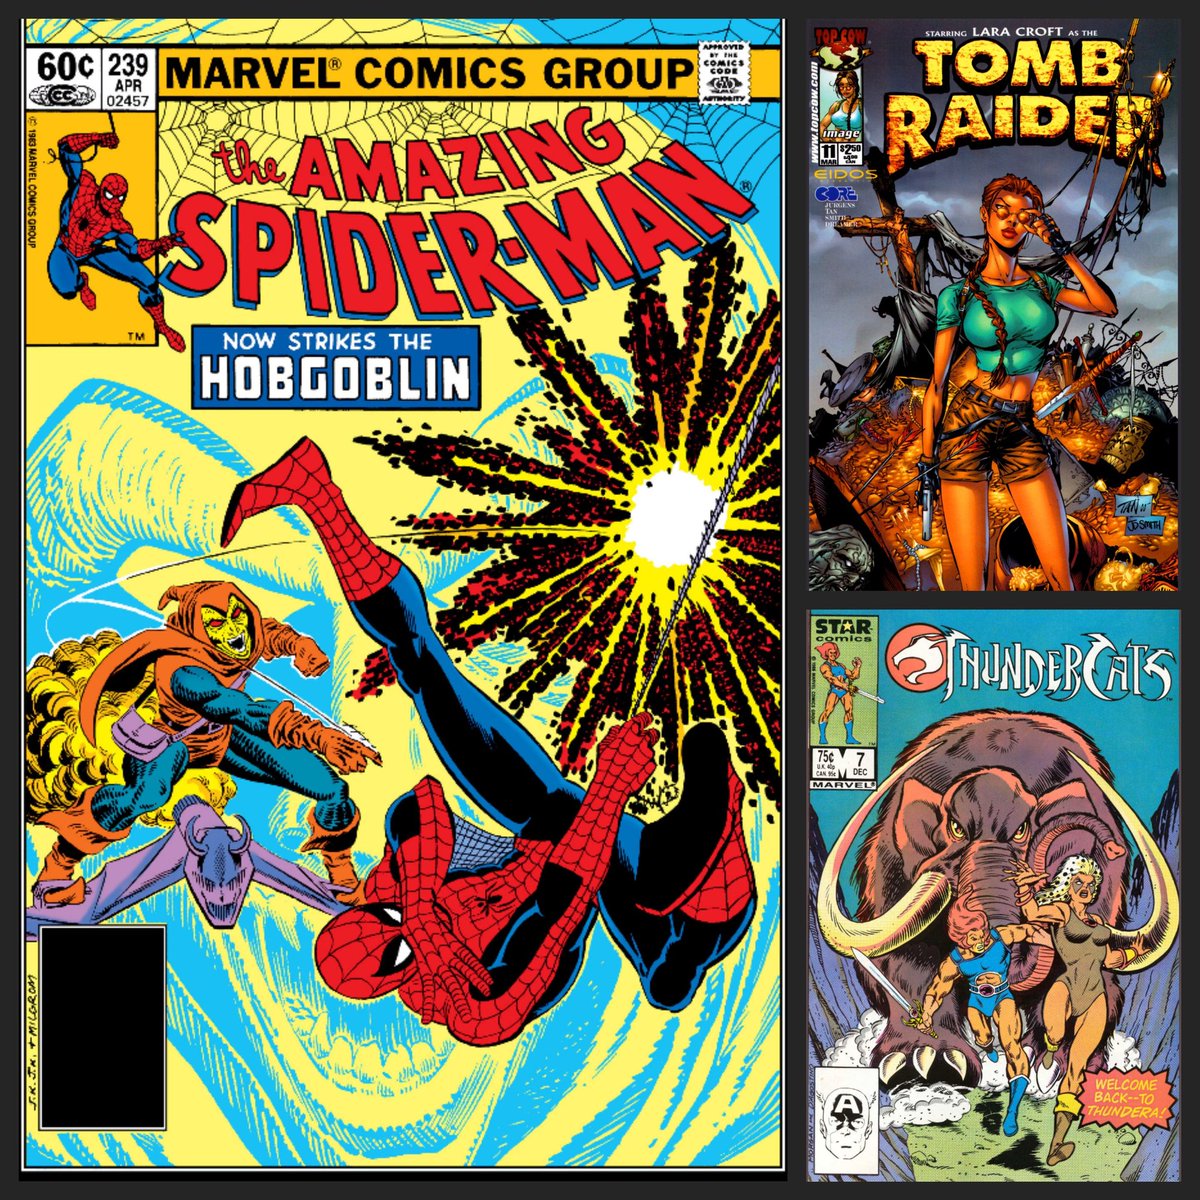 Sunday comic reading 😊 
#reading #comic #comicbooks #comics #marvel #dc #dccomics #classiccomics #retro #retrocomics #readingcomics #80scomics #spiderman #tombraider #Thundercats